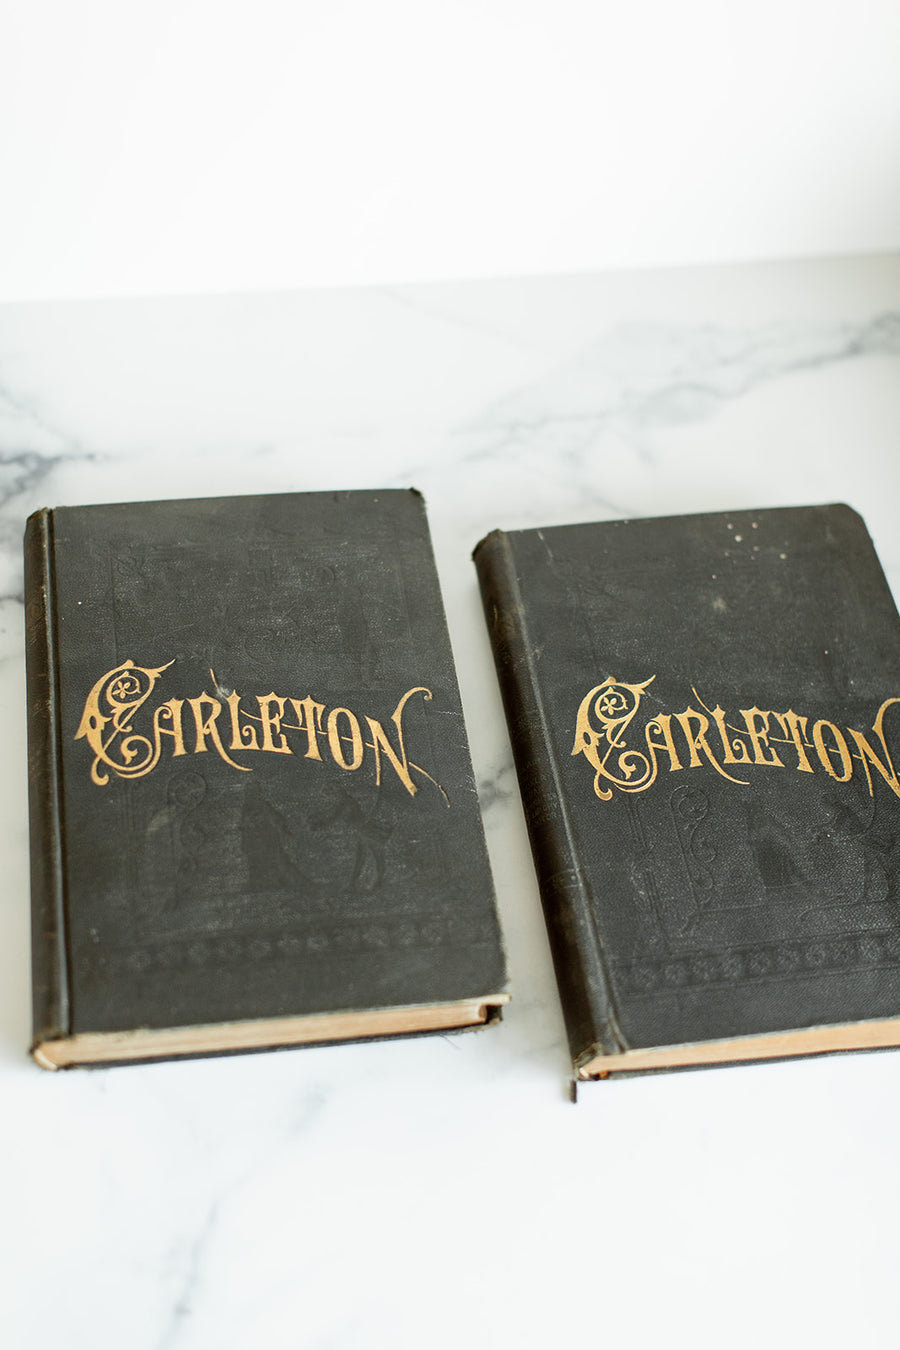 The Works of William Carleton (Volumes 1&2)